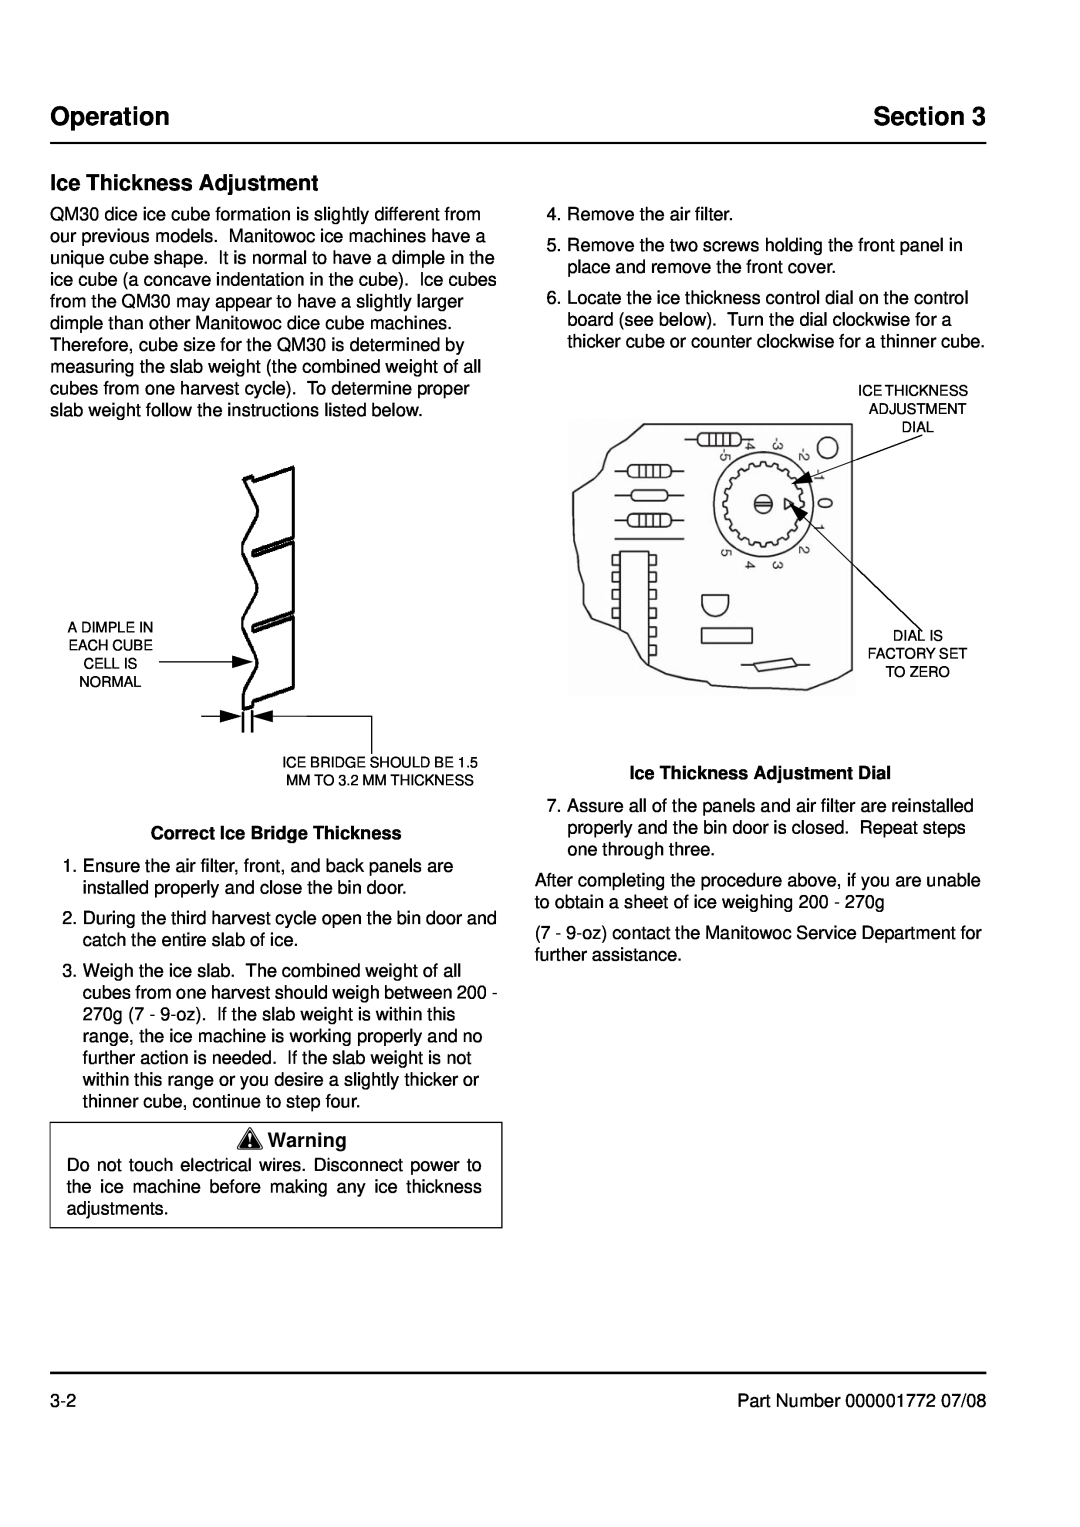 Manitowoc Ice QM30 manual Operation, Section, Ice Thickness Adjustment, Correct Ice Bridge Thickness 